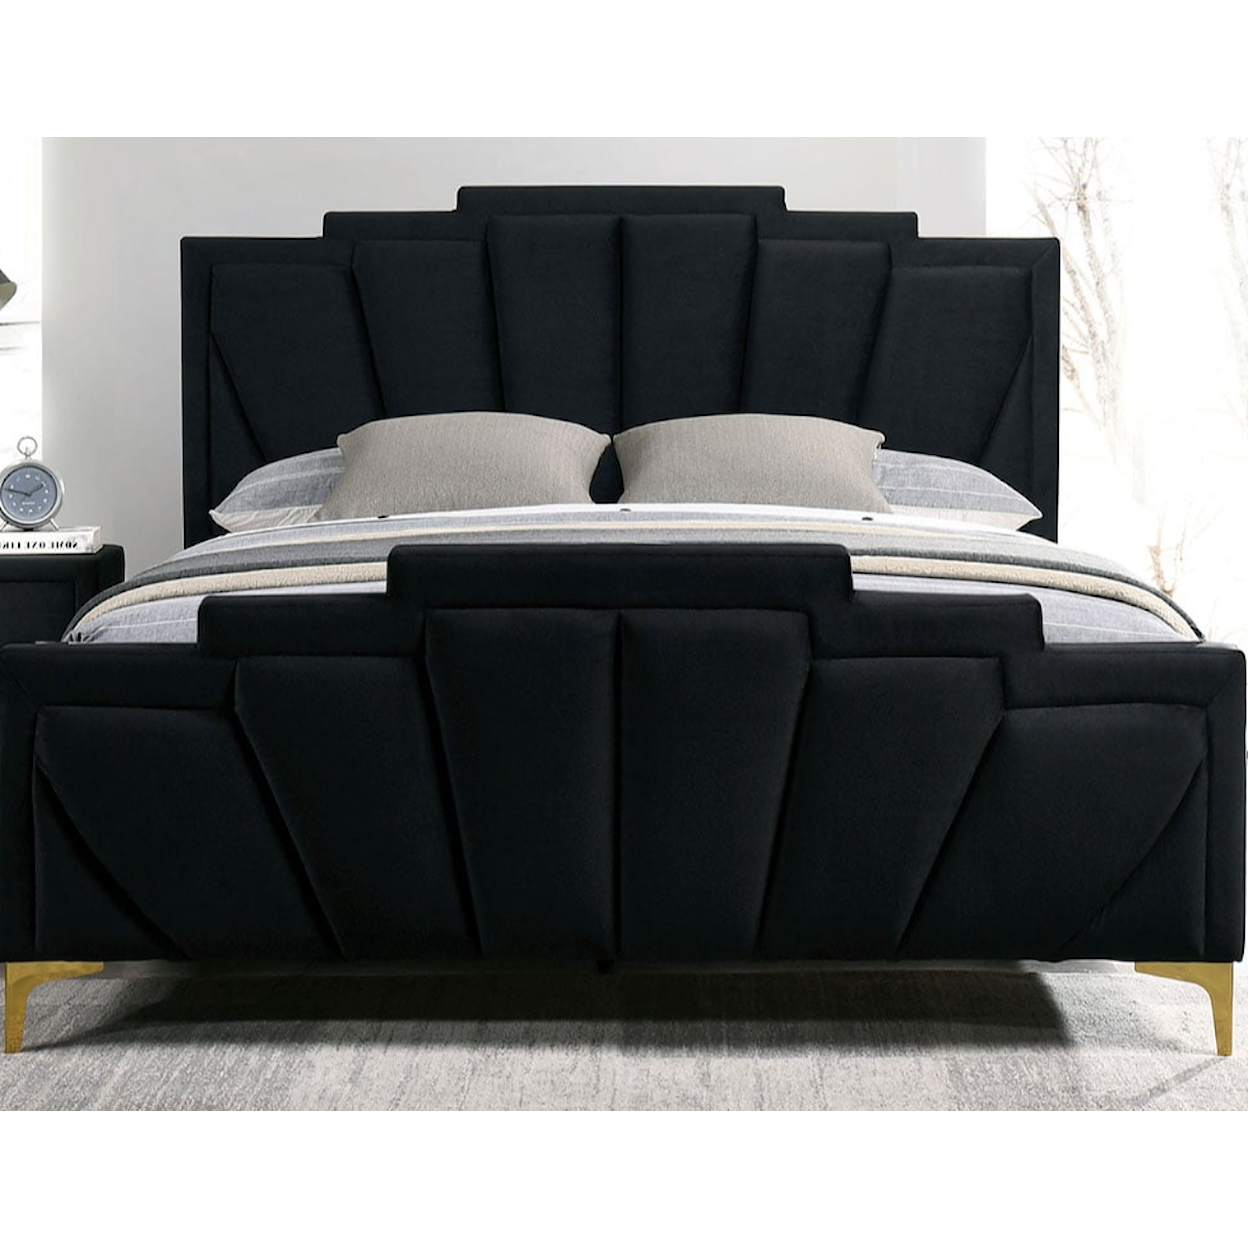 Furniture of America FLORIZEL Upholstered King Panel Bed - Red